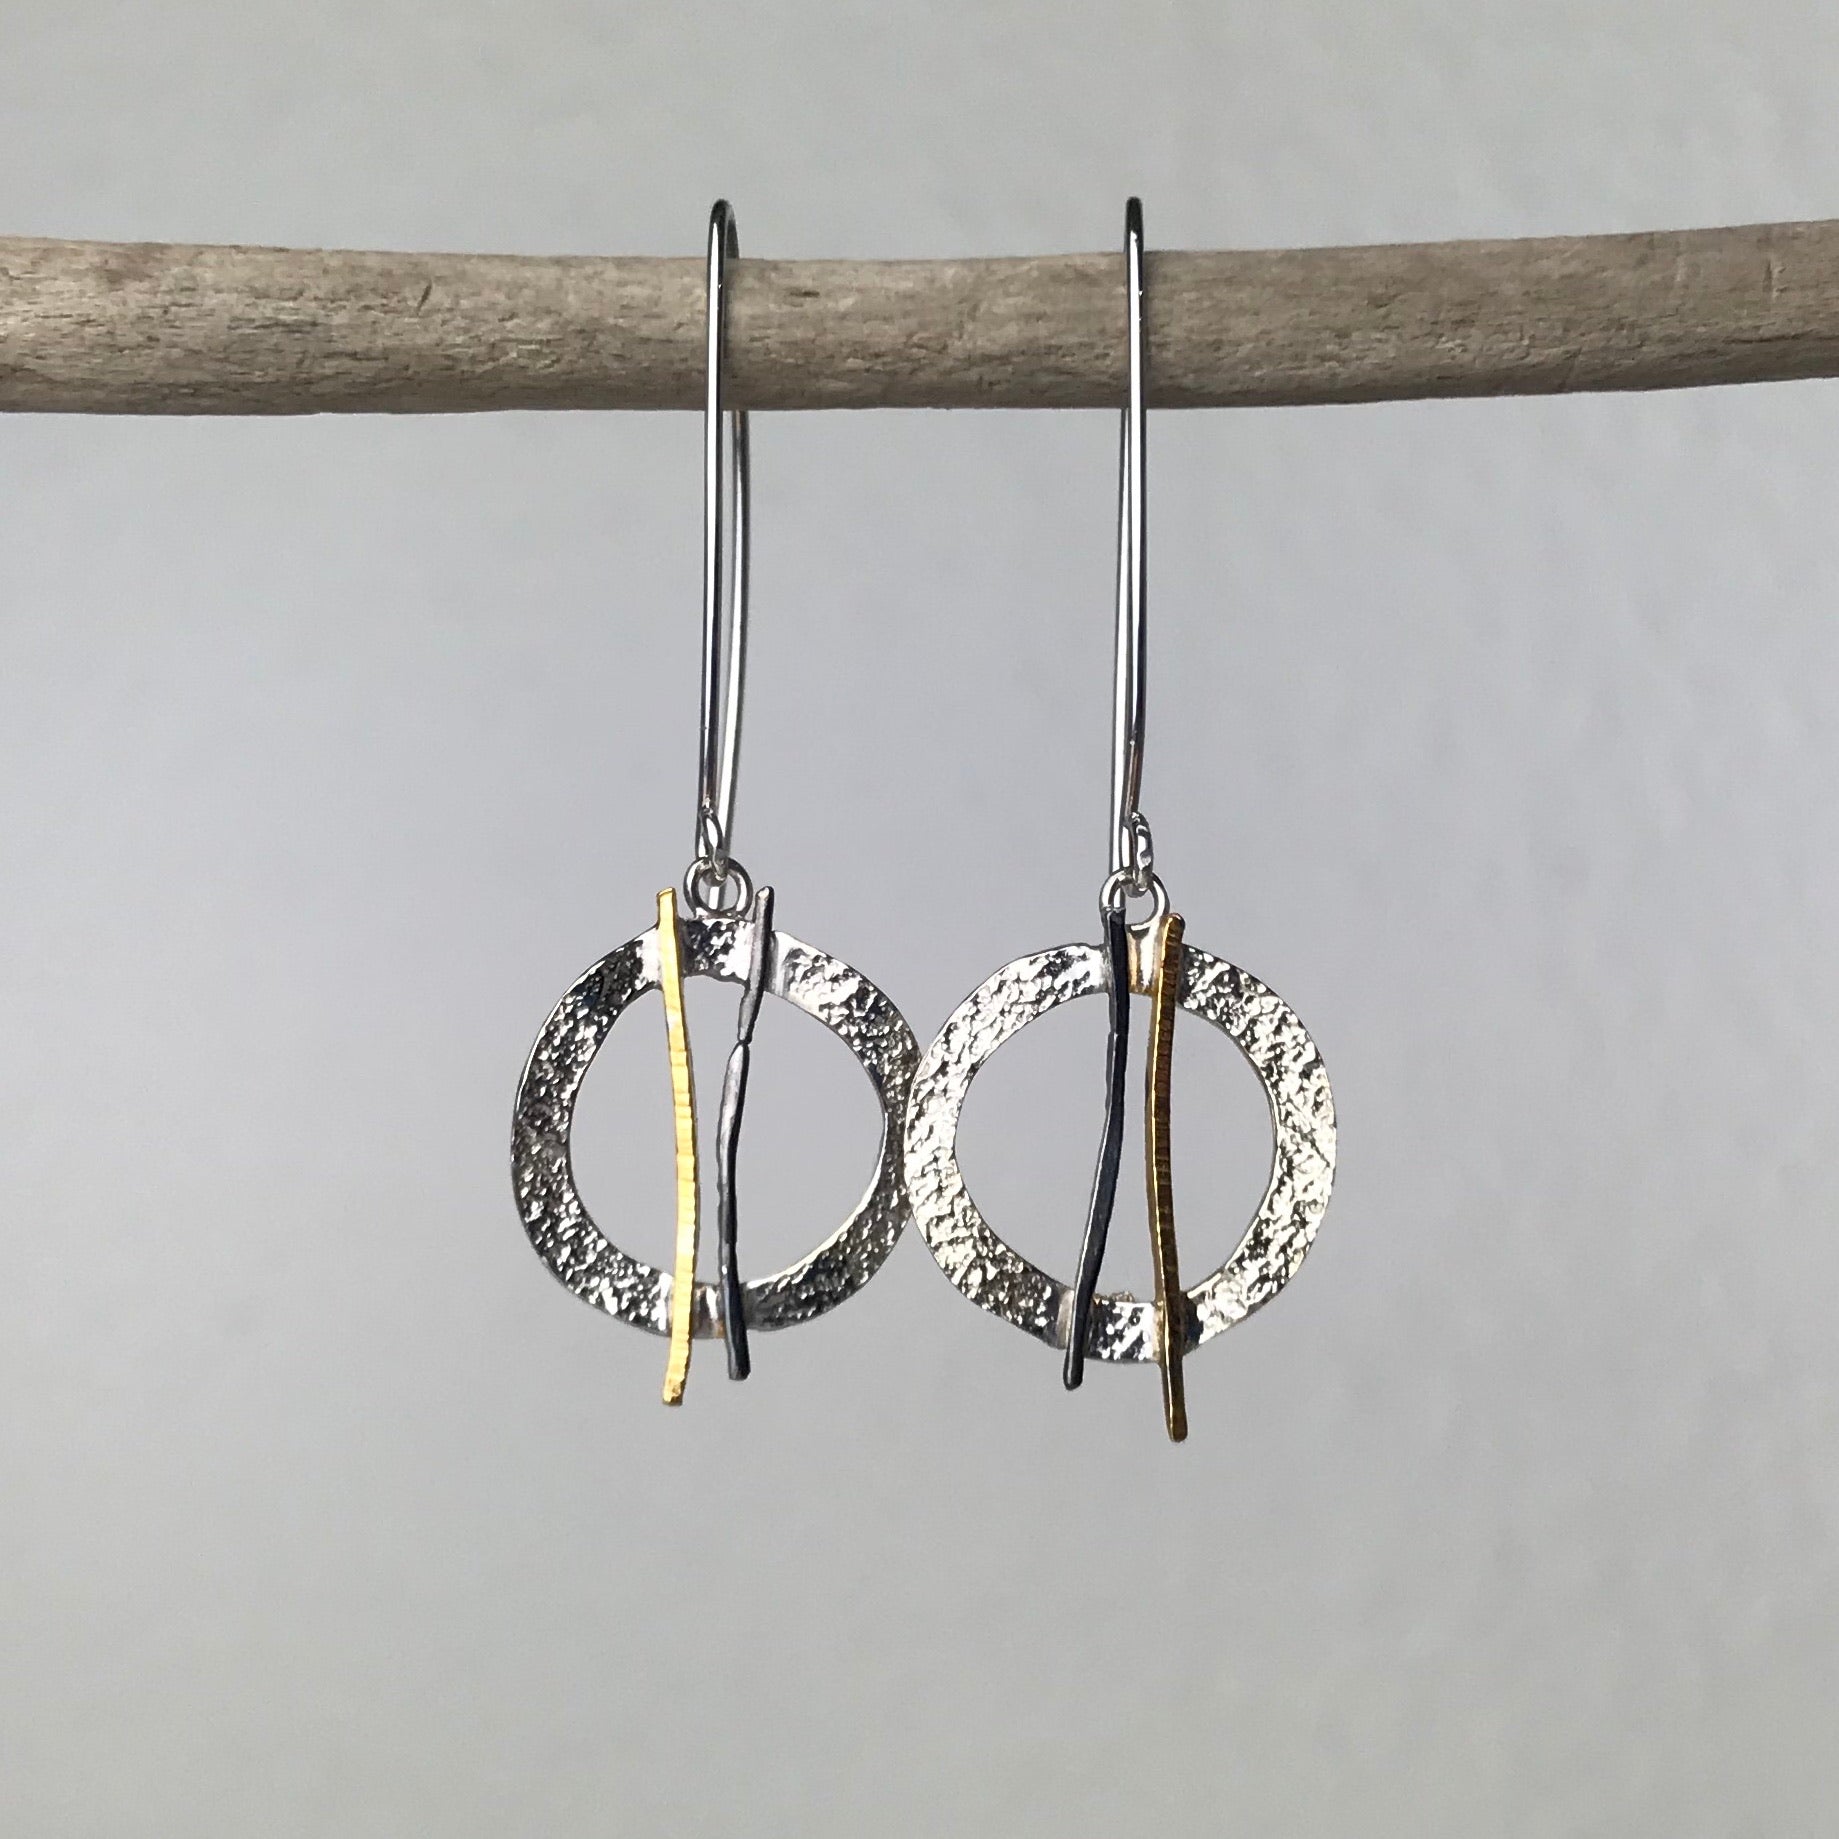 Hoop Twig Earrings - The Nancy Smillie Shop - Art, Jewellery & Designer Gifts Glasgow